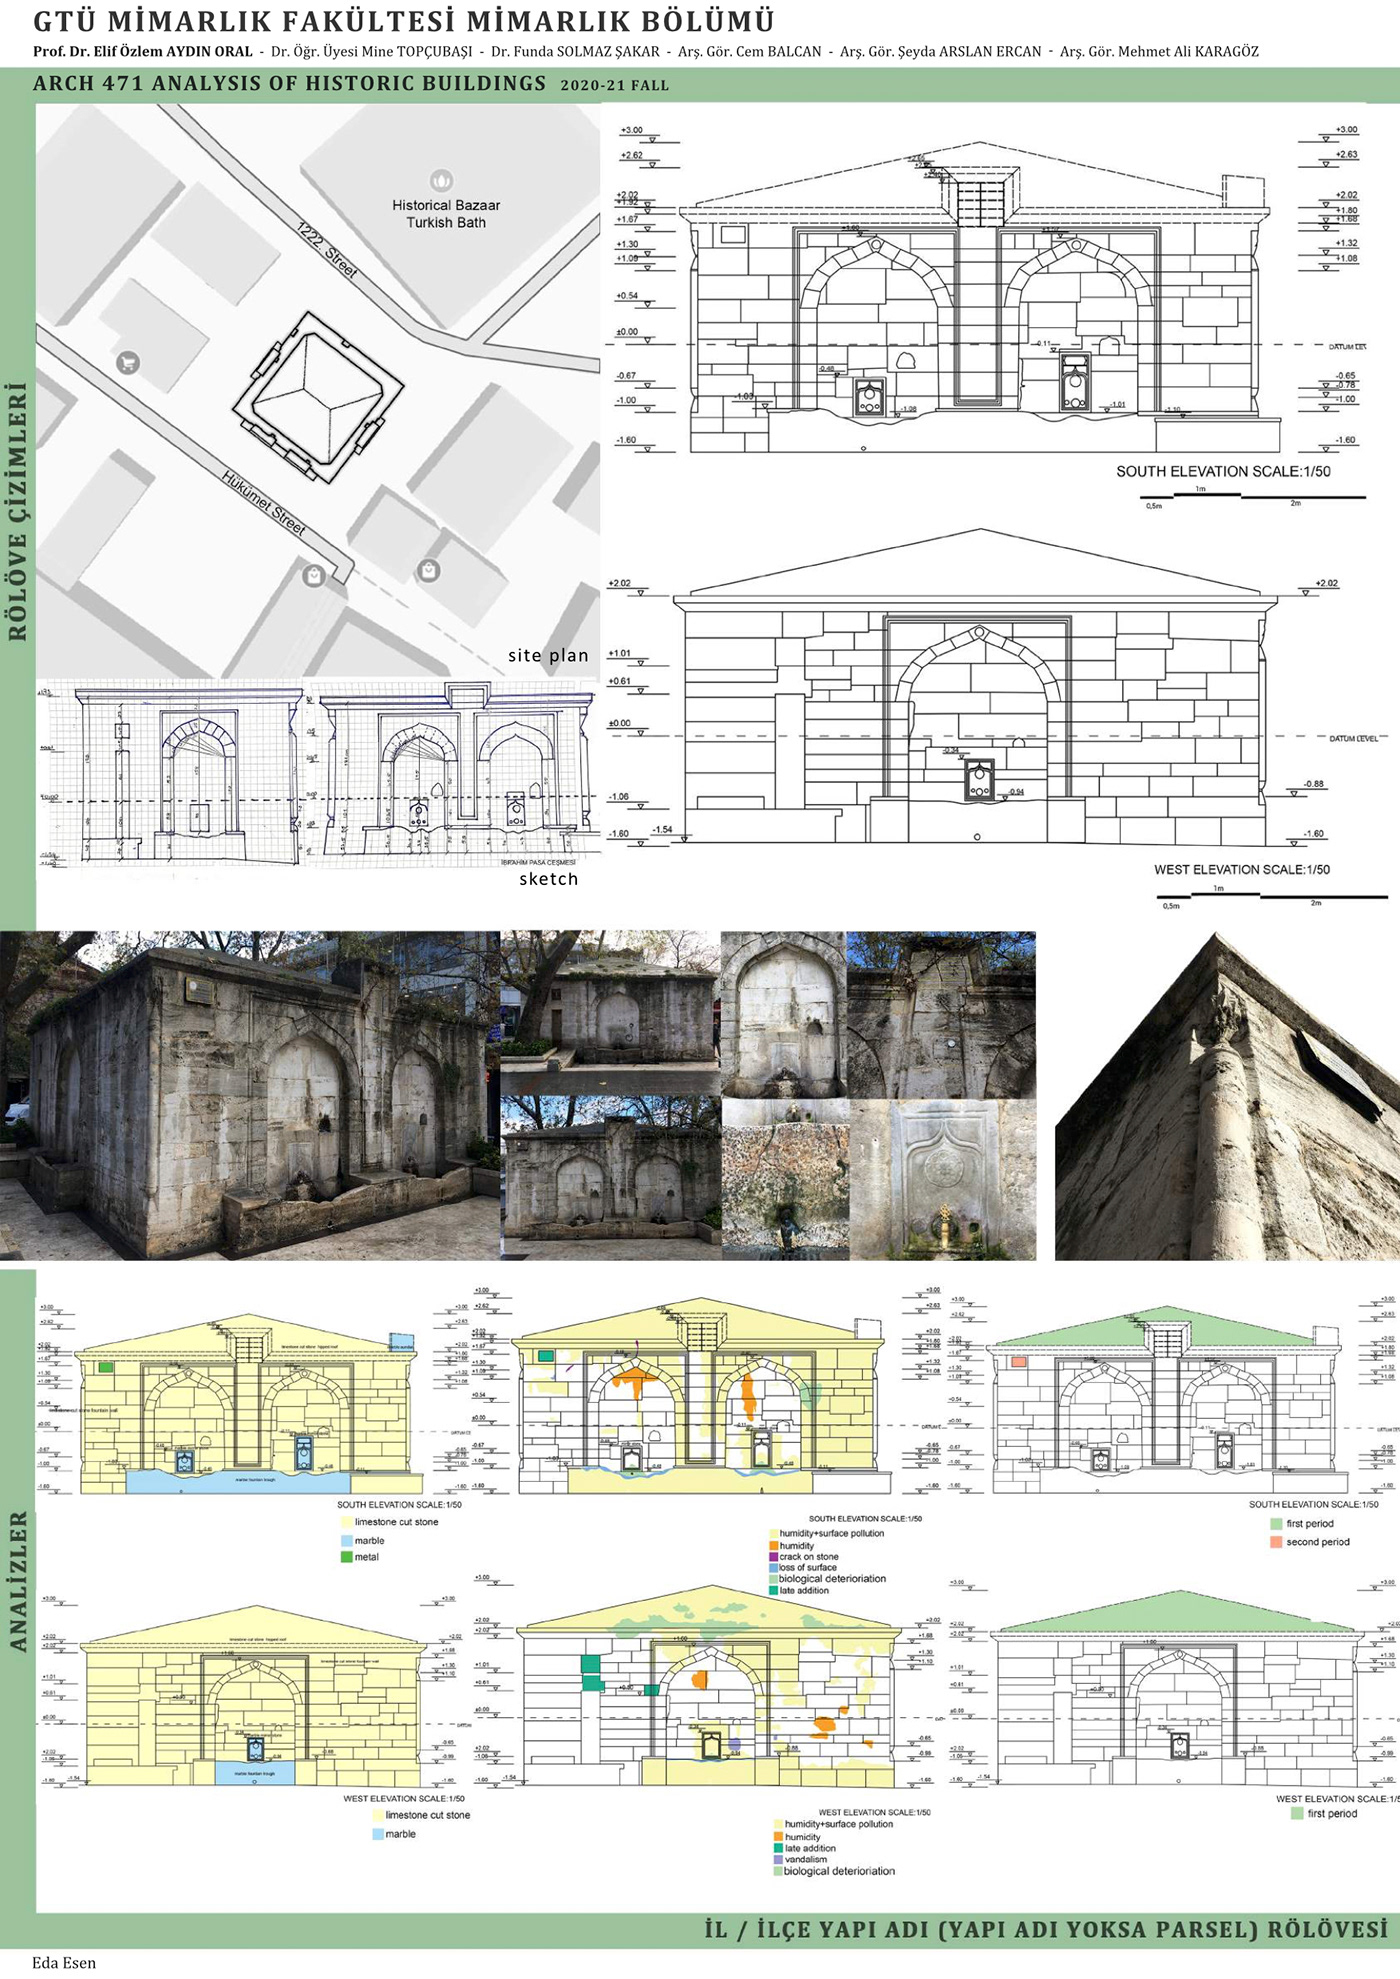 architectural survey architecture conservation Deterioration Historical Building historical classification inventory recording material restoration survey measurement